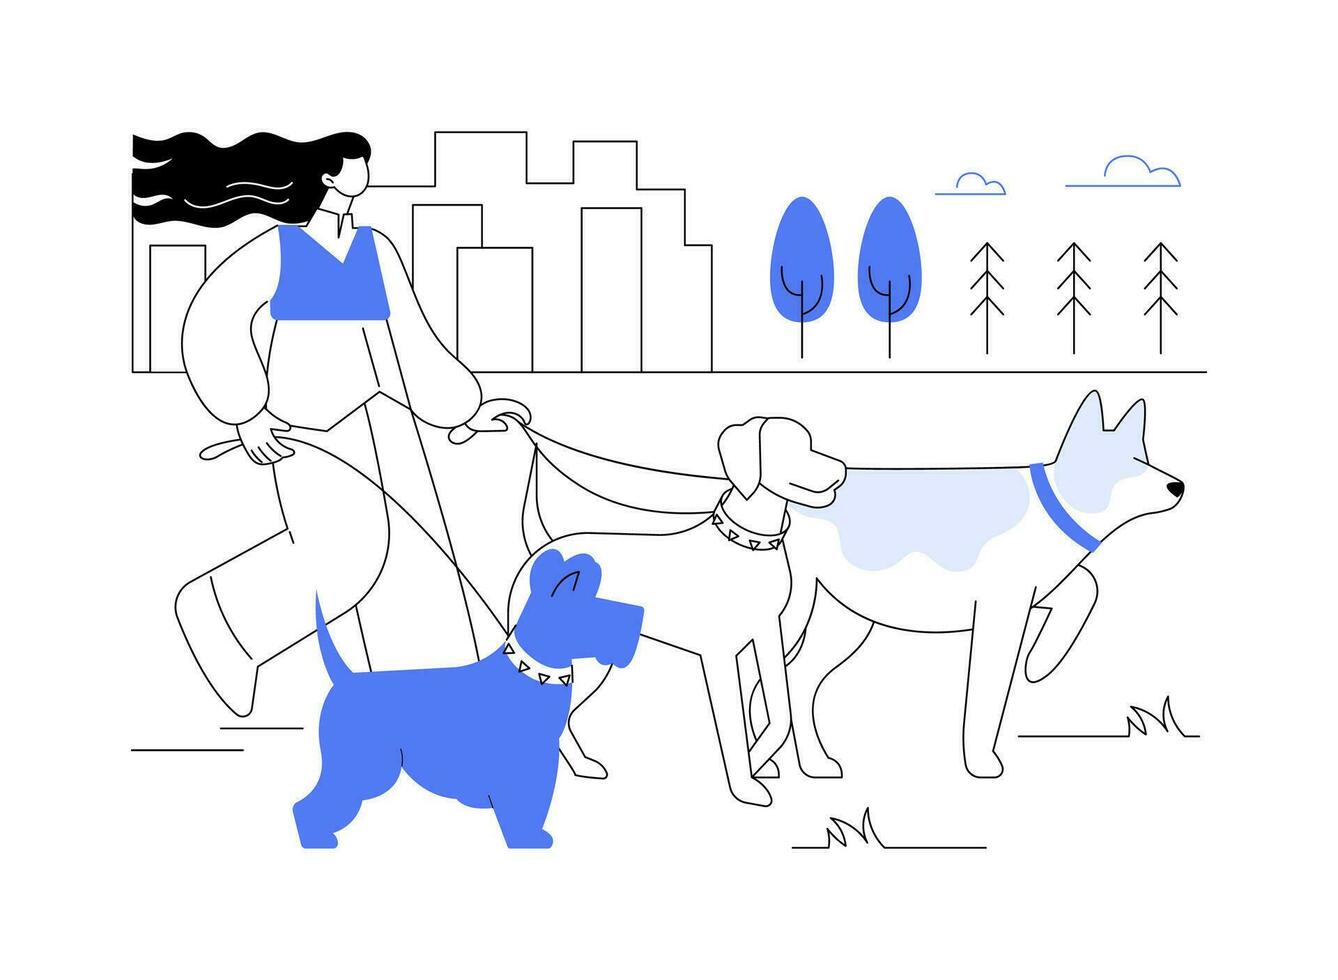 Pet walking isolated cartoon vector illustrations.